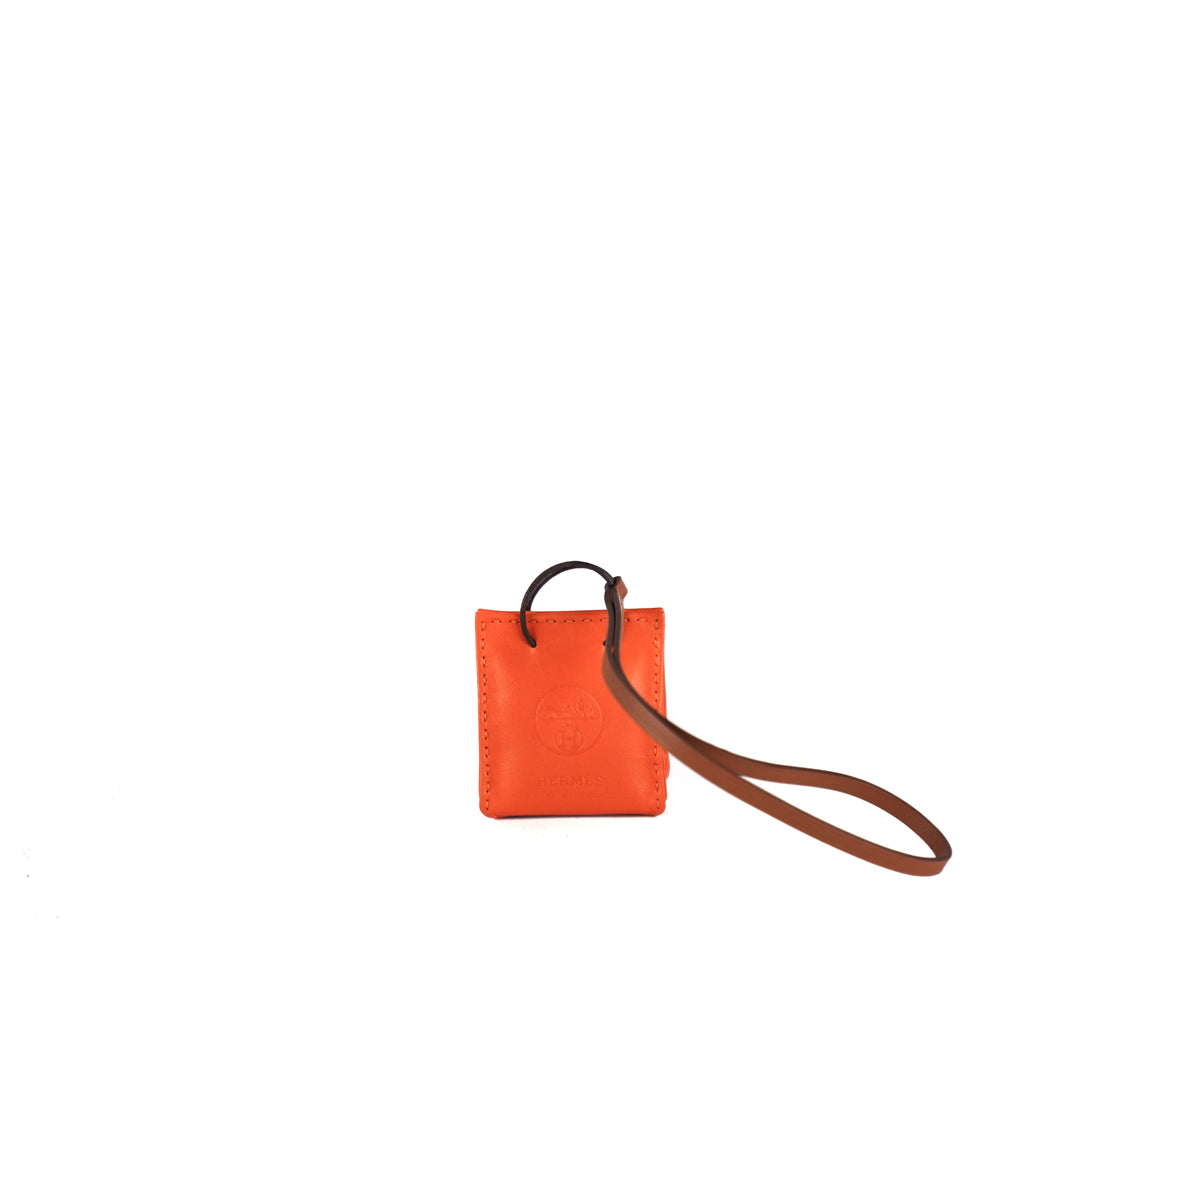 Hermès Authenticated Shopping Bag Charm